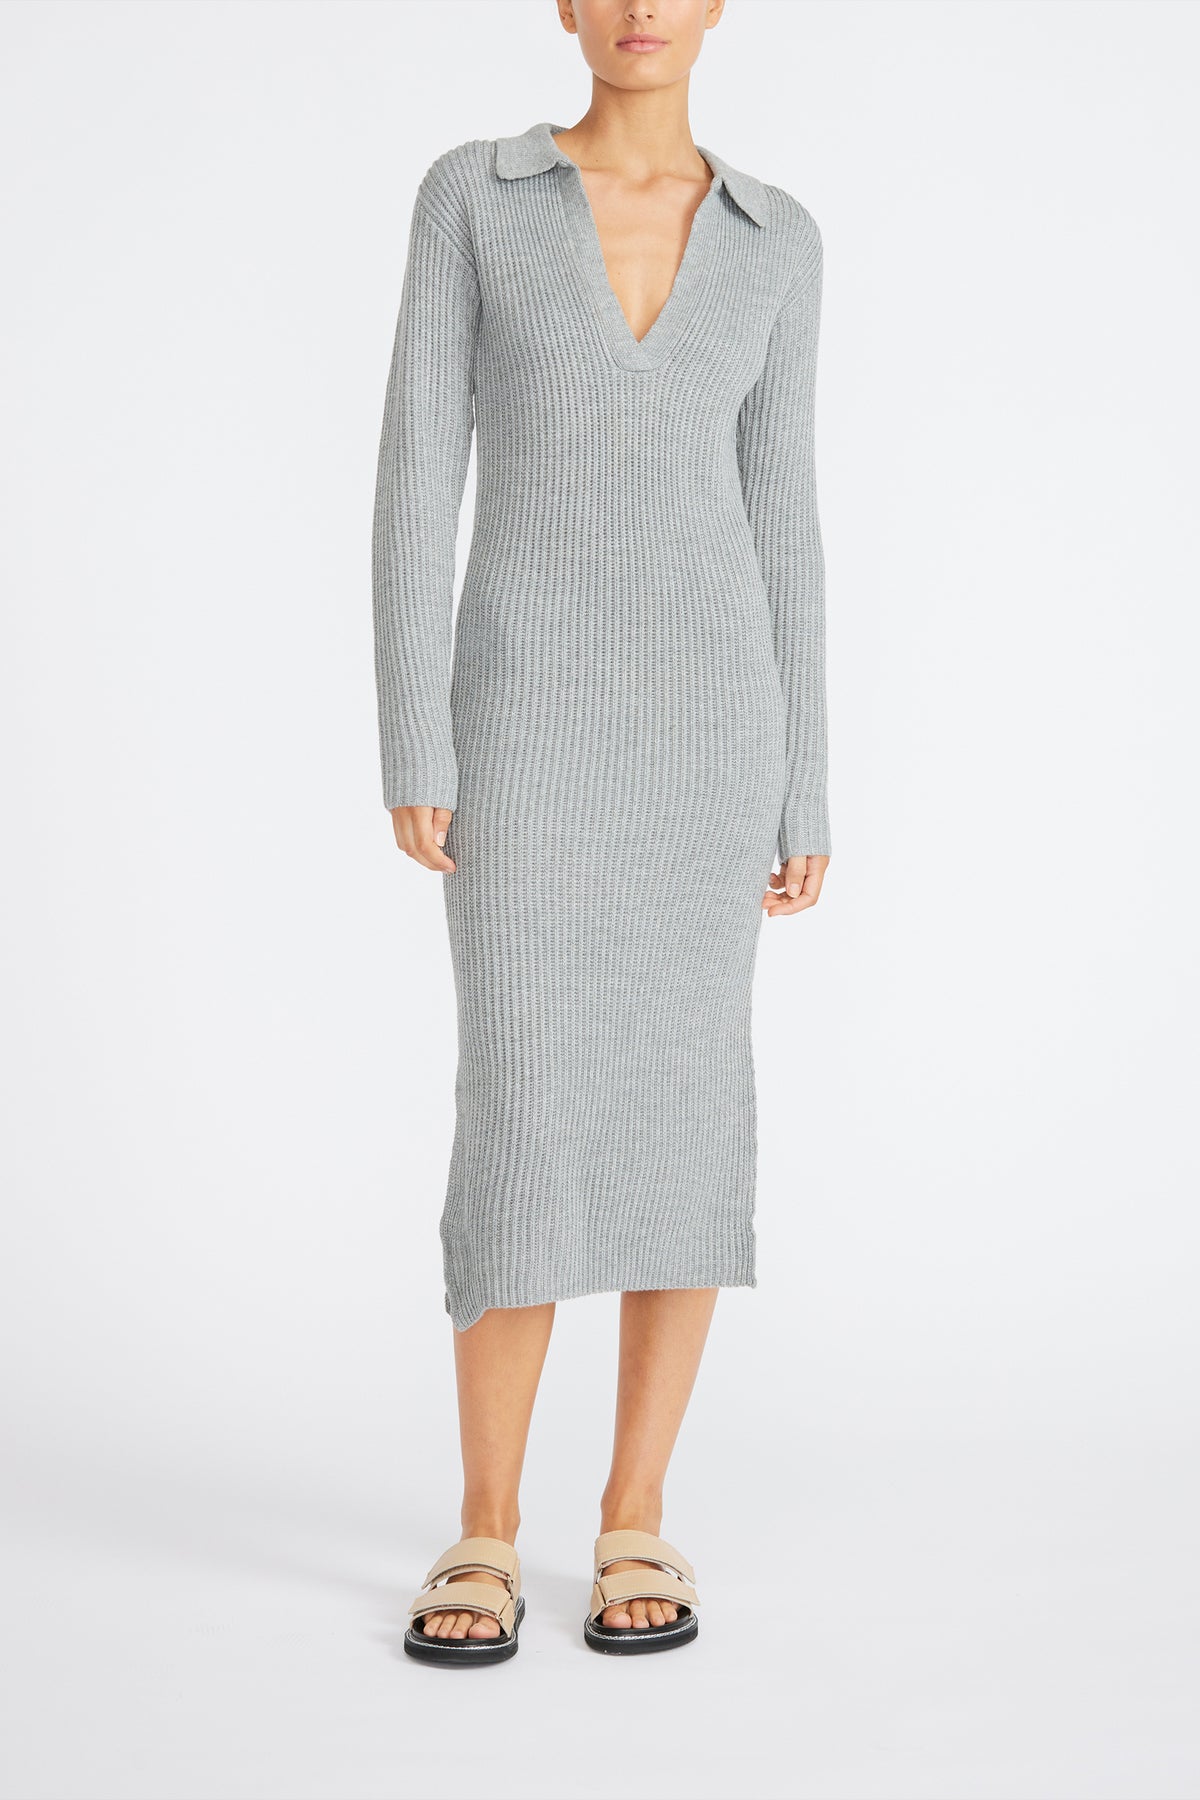 Linea Long Sleeve Rib Knit Midi Dress in Grey Marle